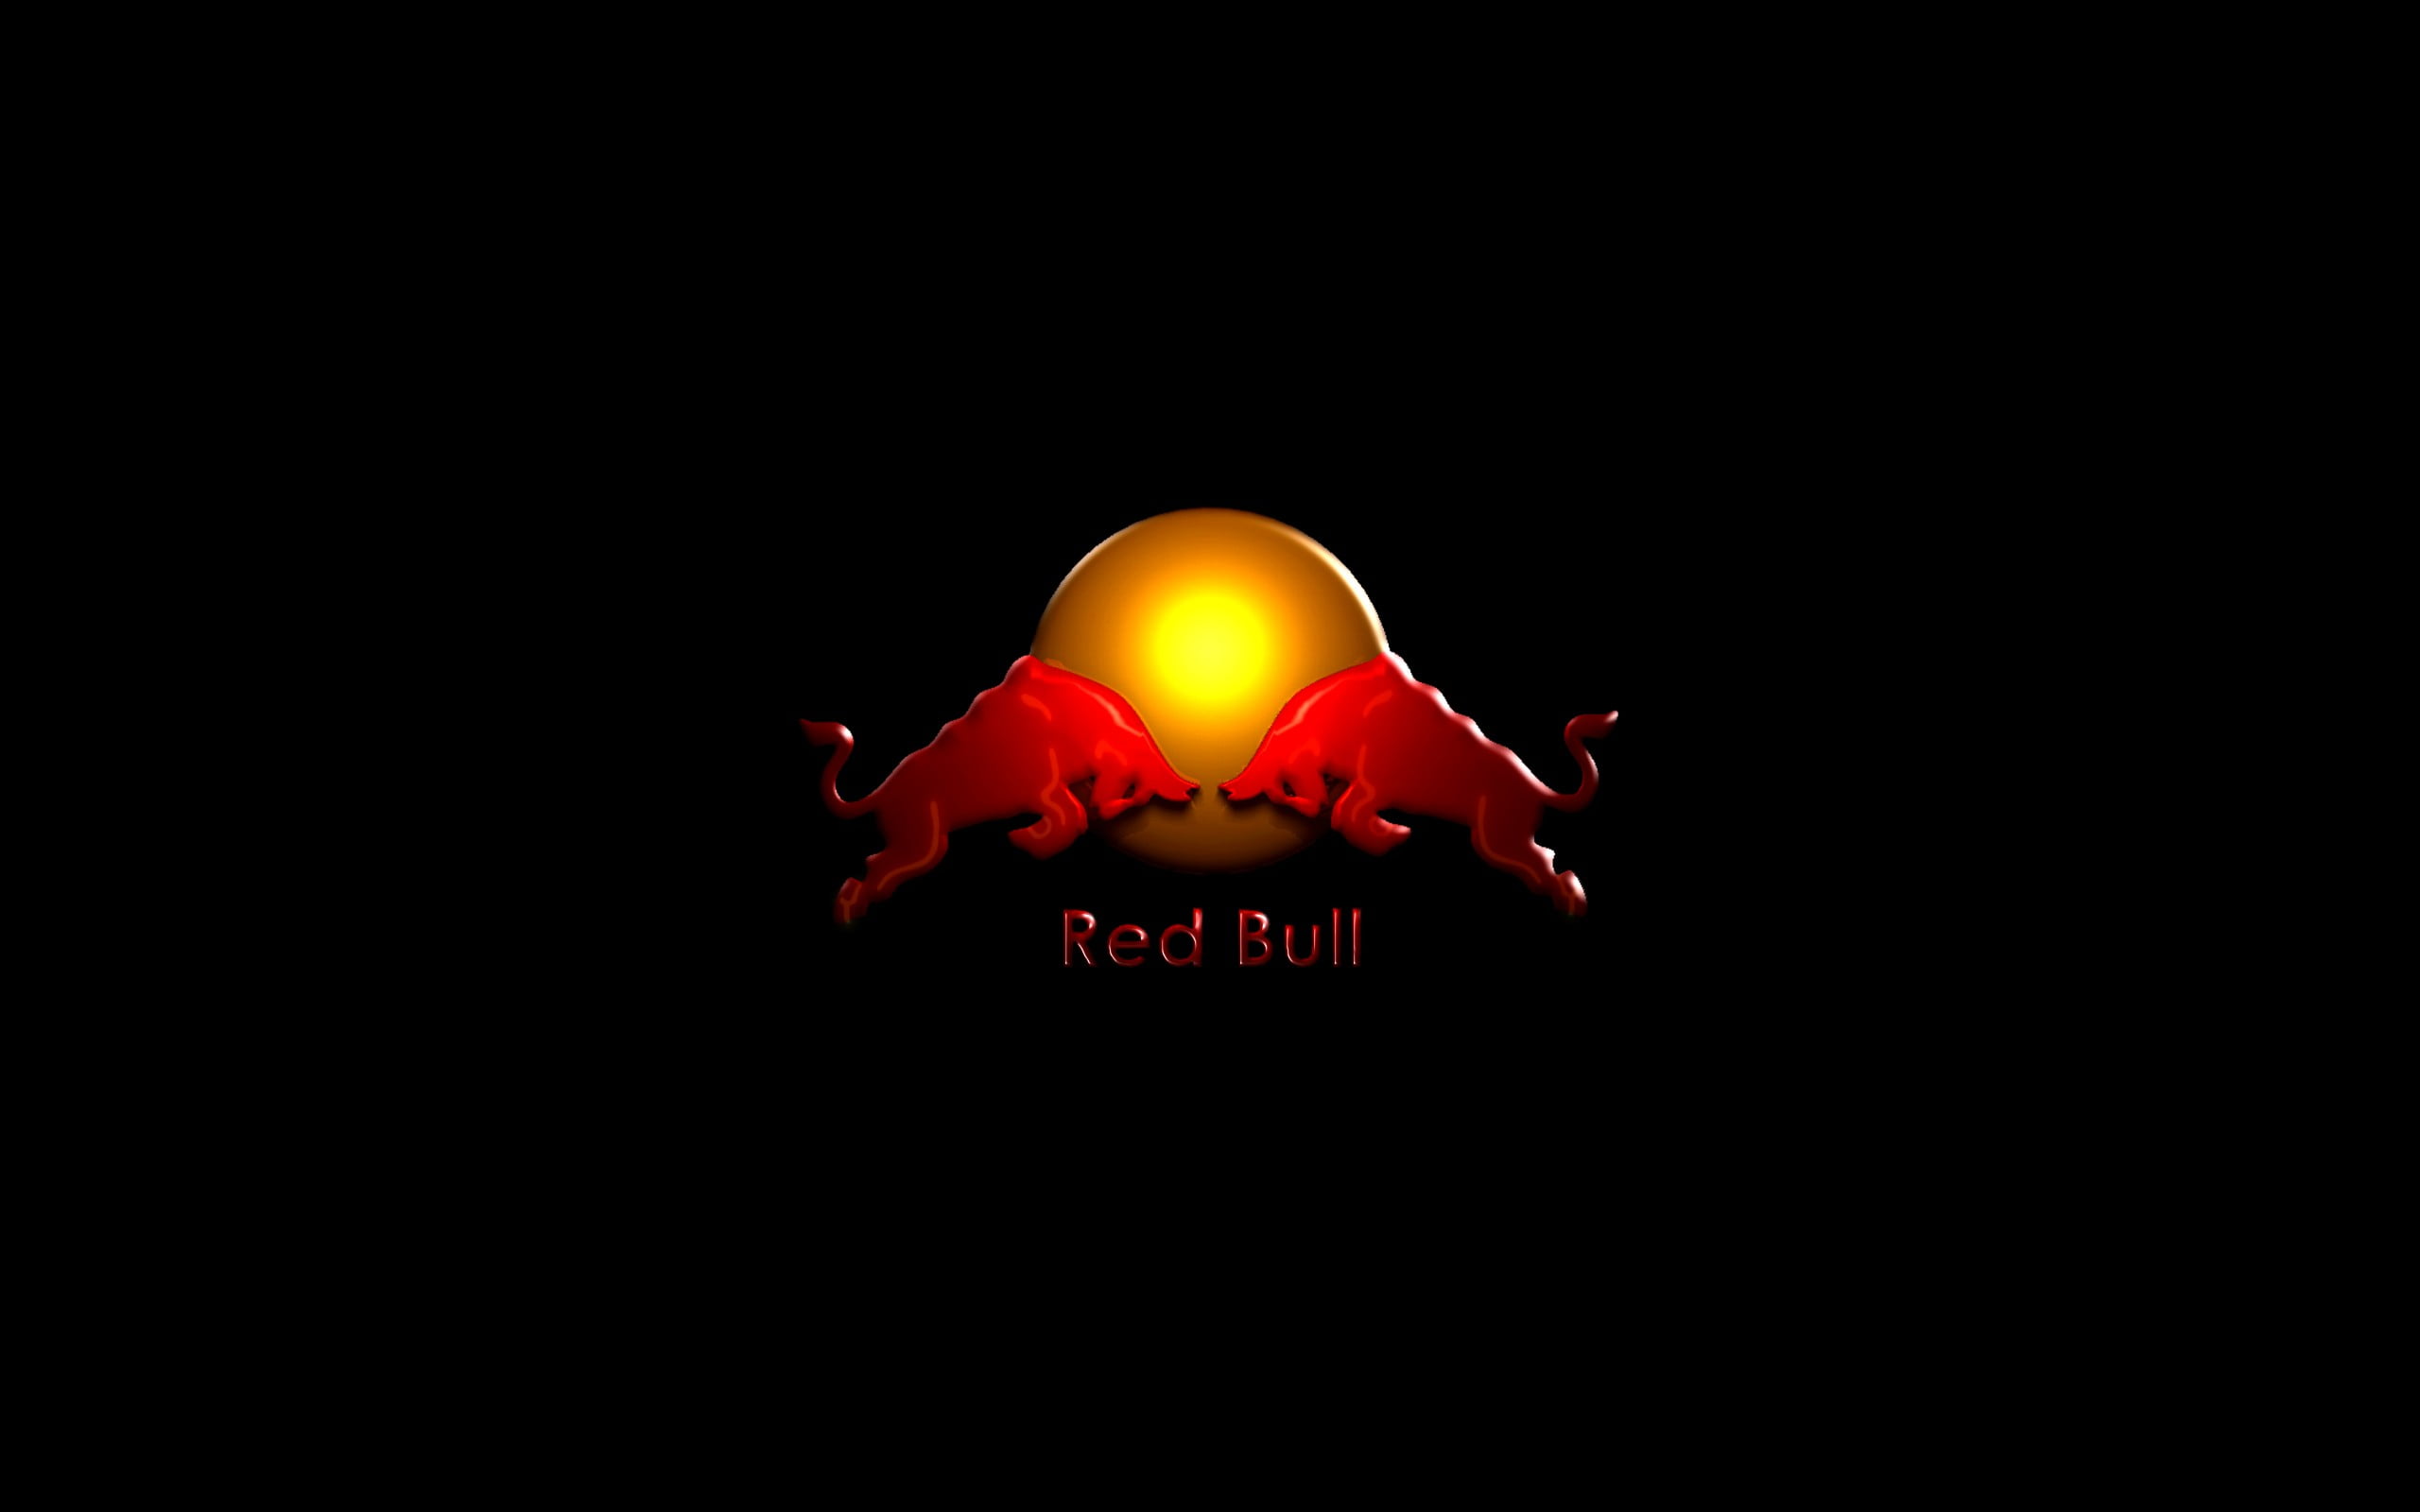 Red Bull Wallpapers 4k Hd Red Bull Backgrounds On Wallpaperbat